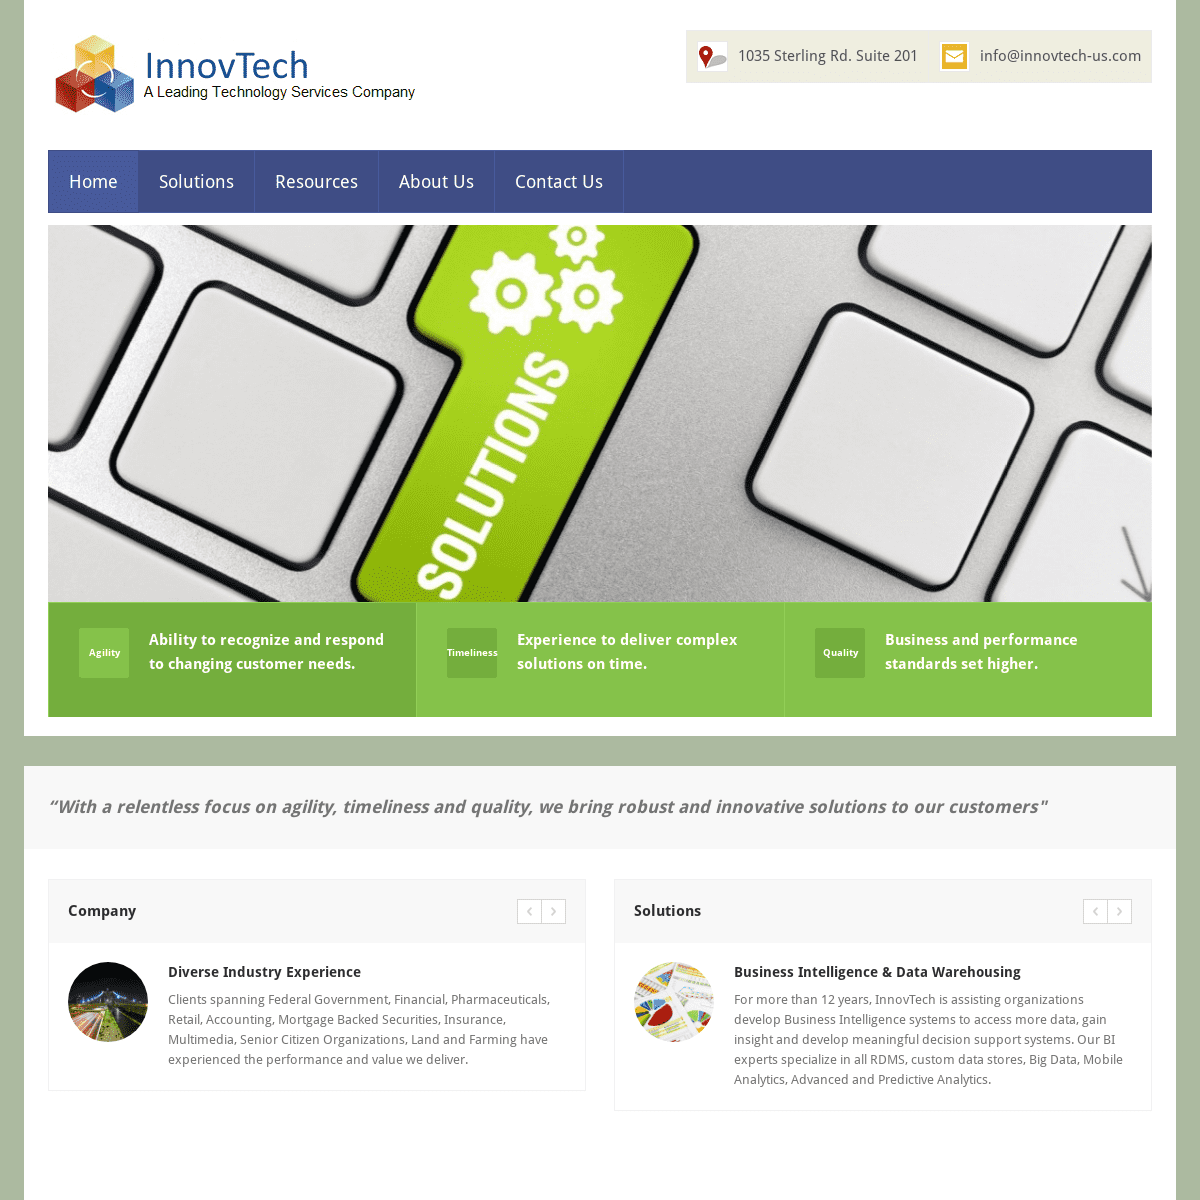 A complete backup of innovtech-us.com